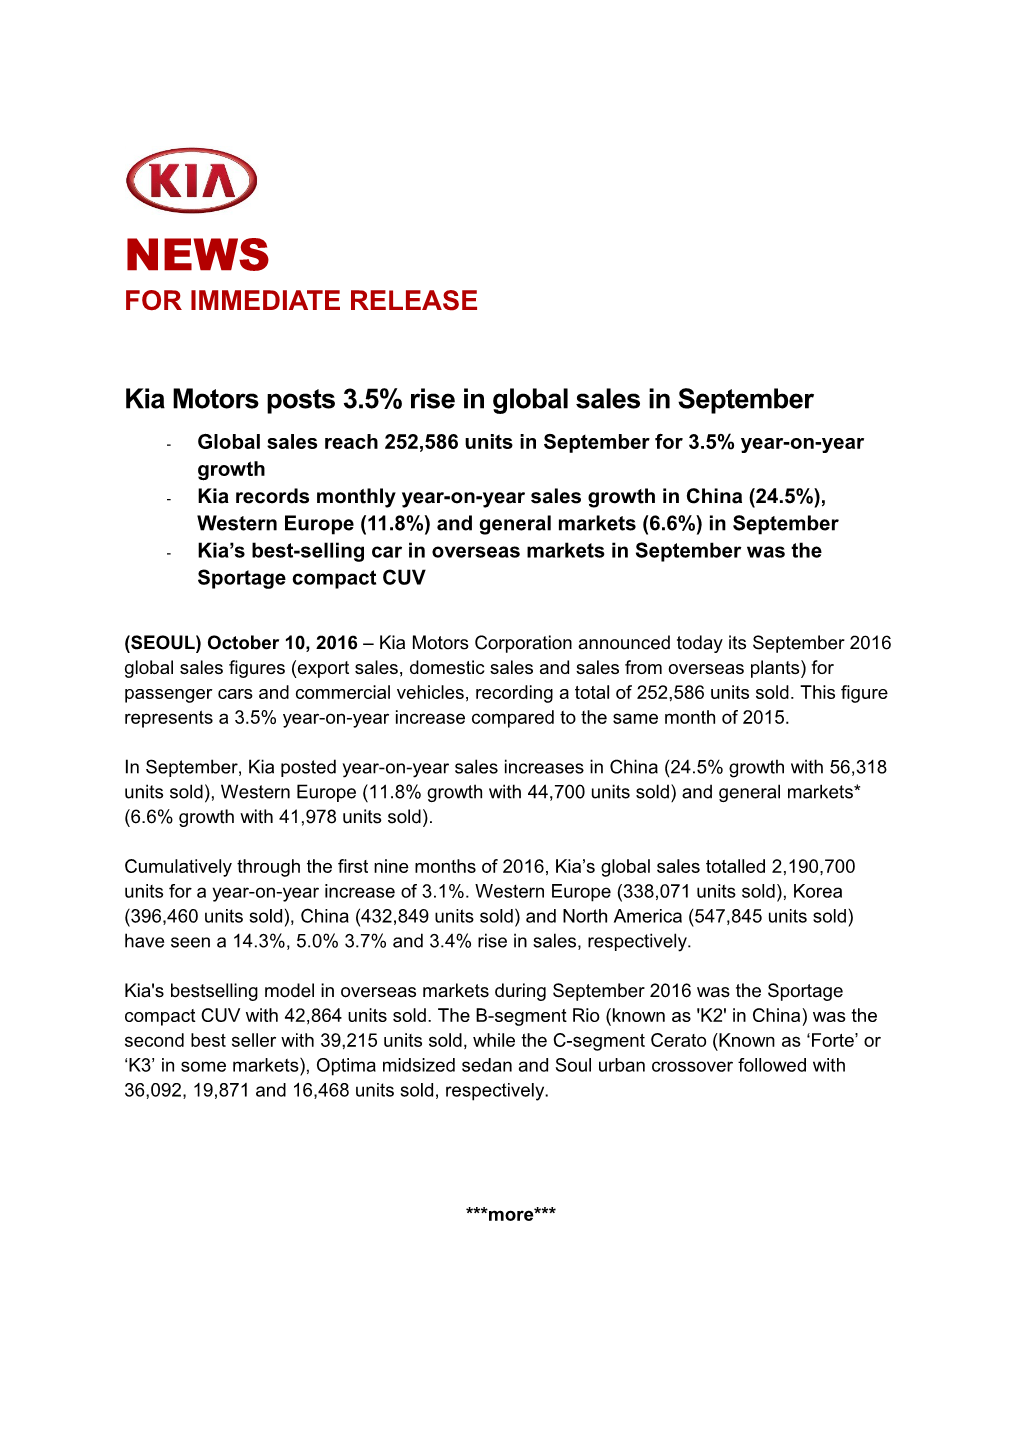 Kia Motors Posts 3.5% Rise in Global Sales in September